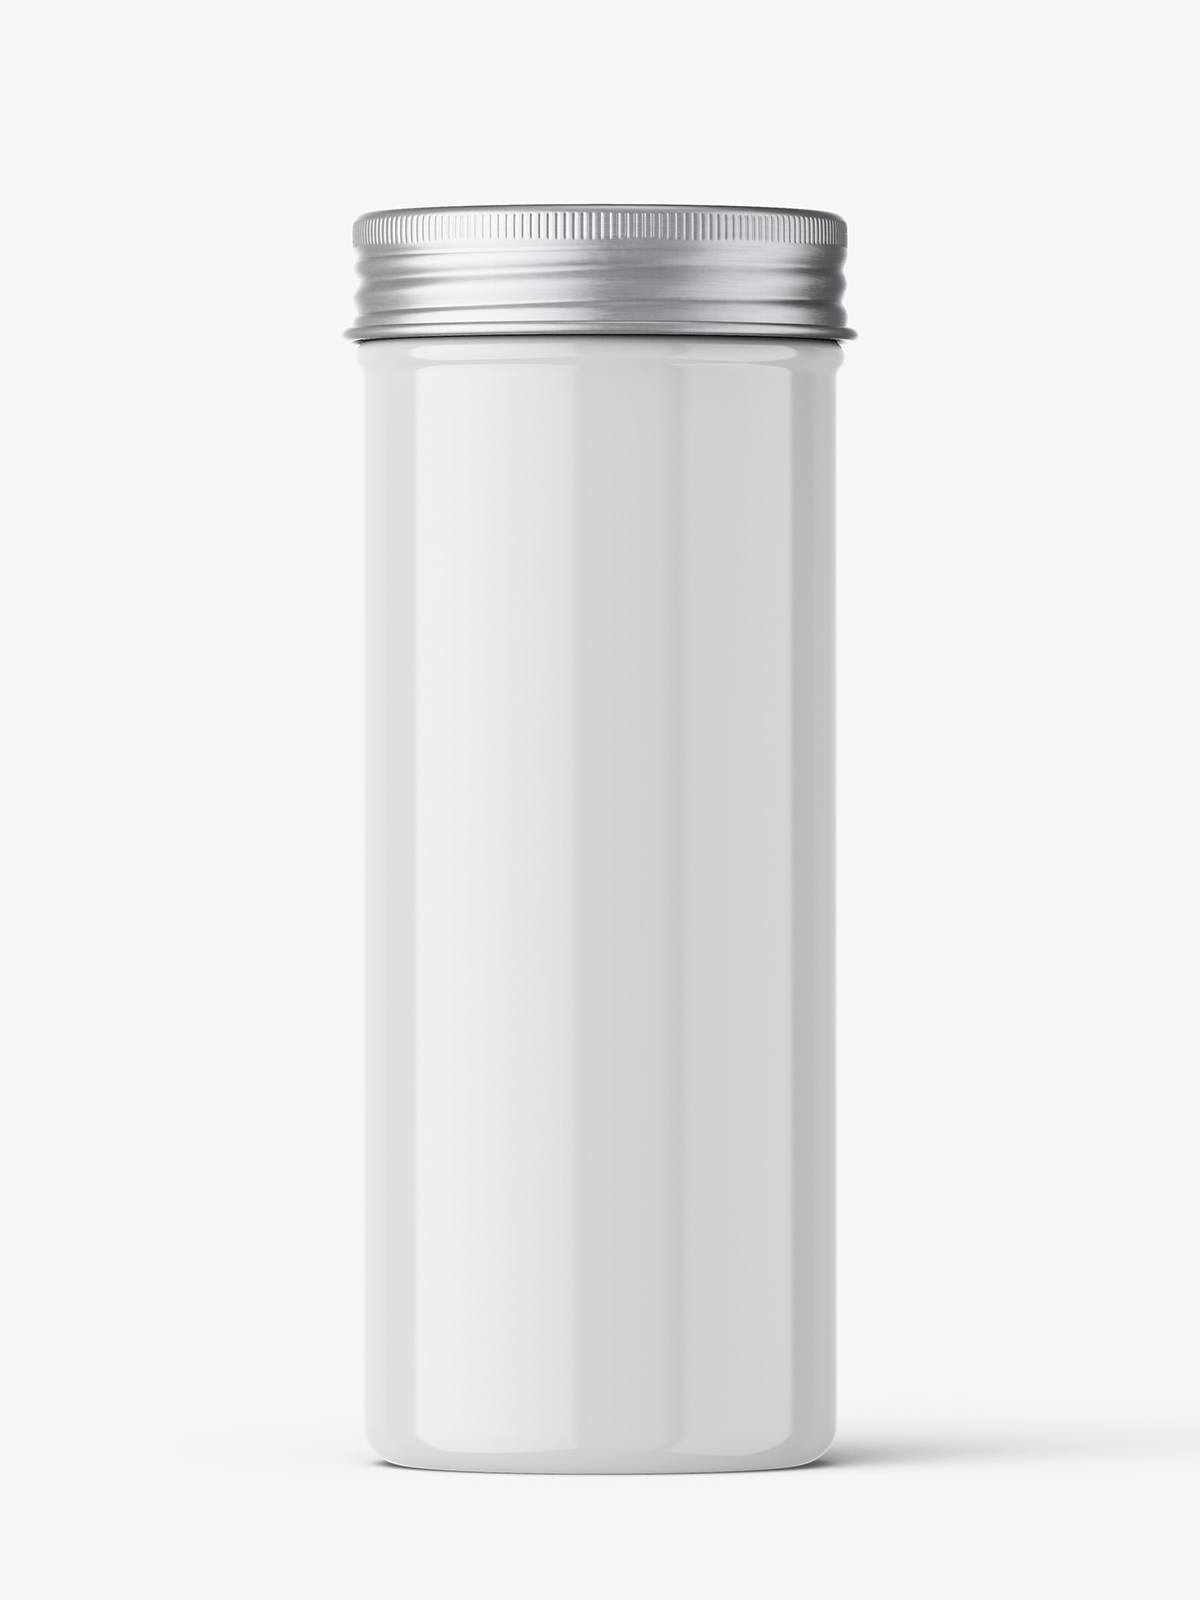 Download Jar With Metallic Cap Glossy Smarty Mockups